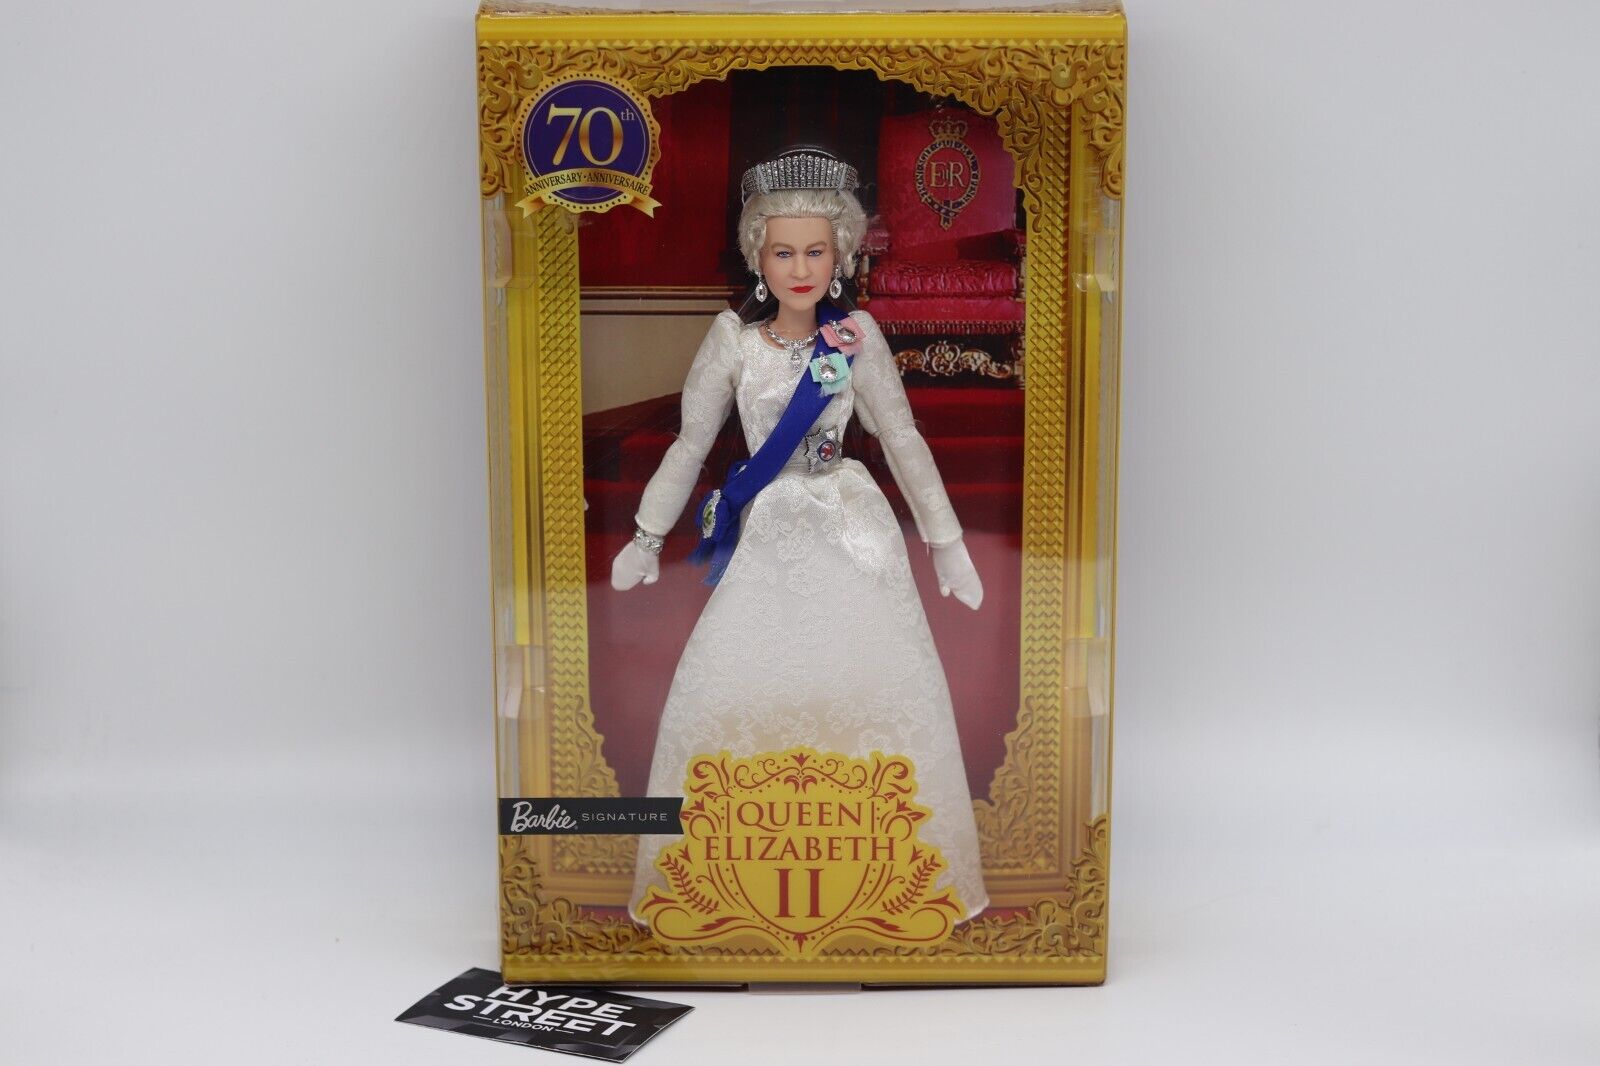 Barbie Queen Elizabeth II 70th Anniversary Platinum Jubilee Dolls Her Majesty